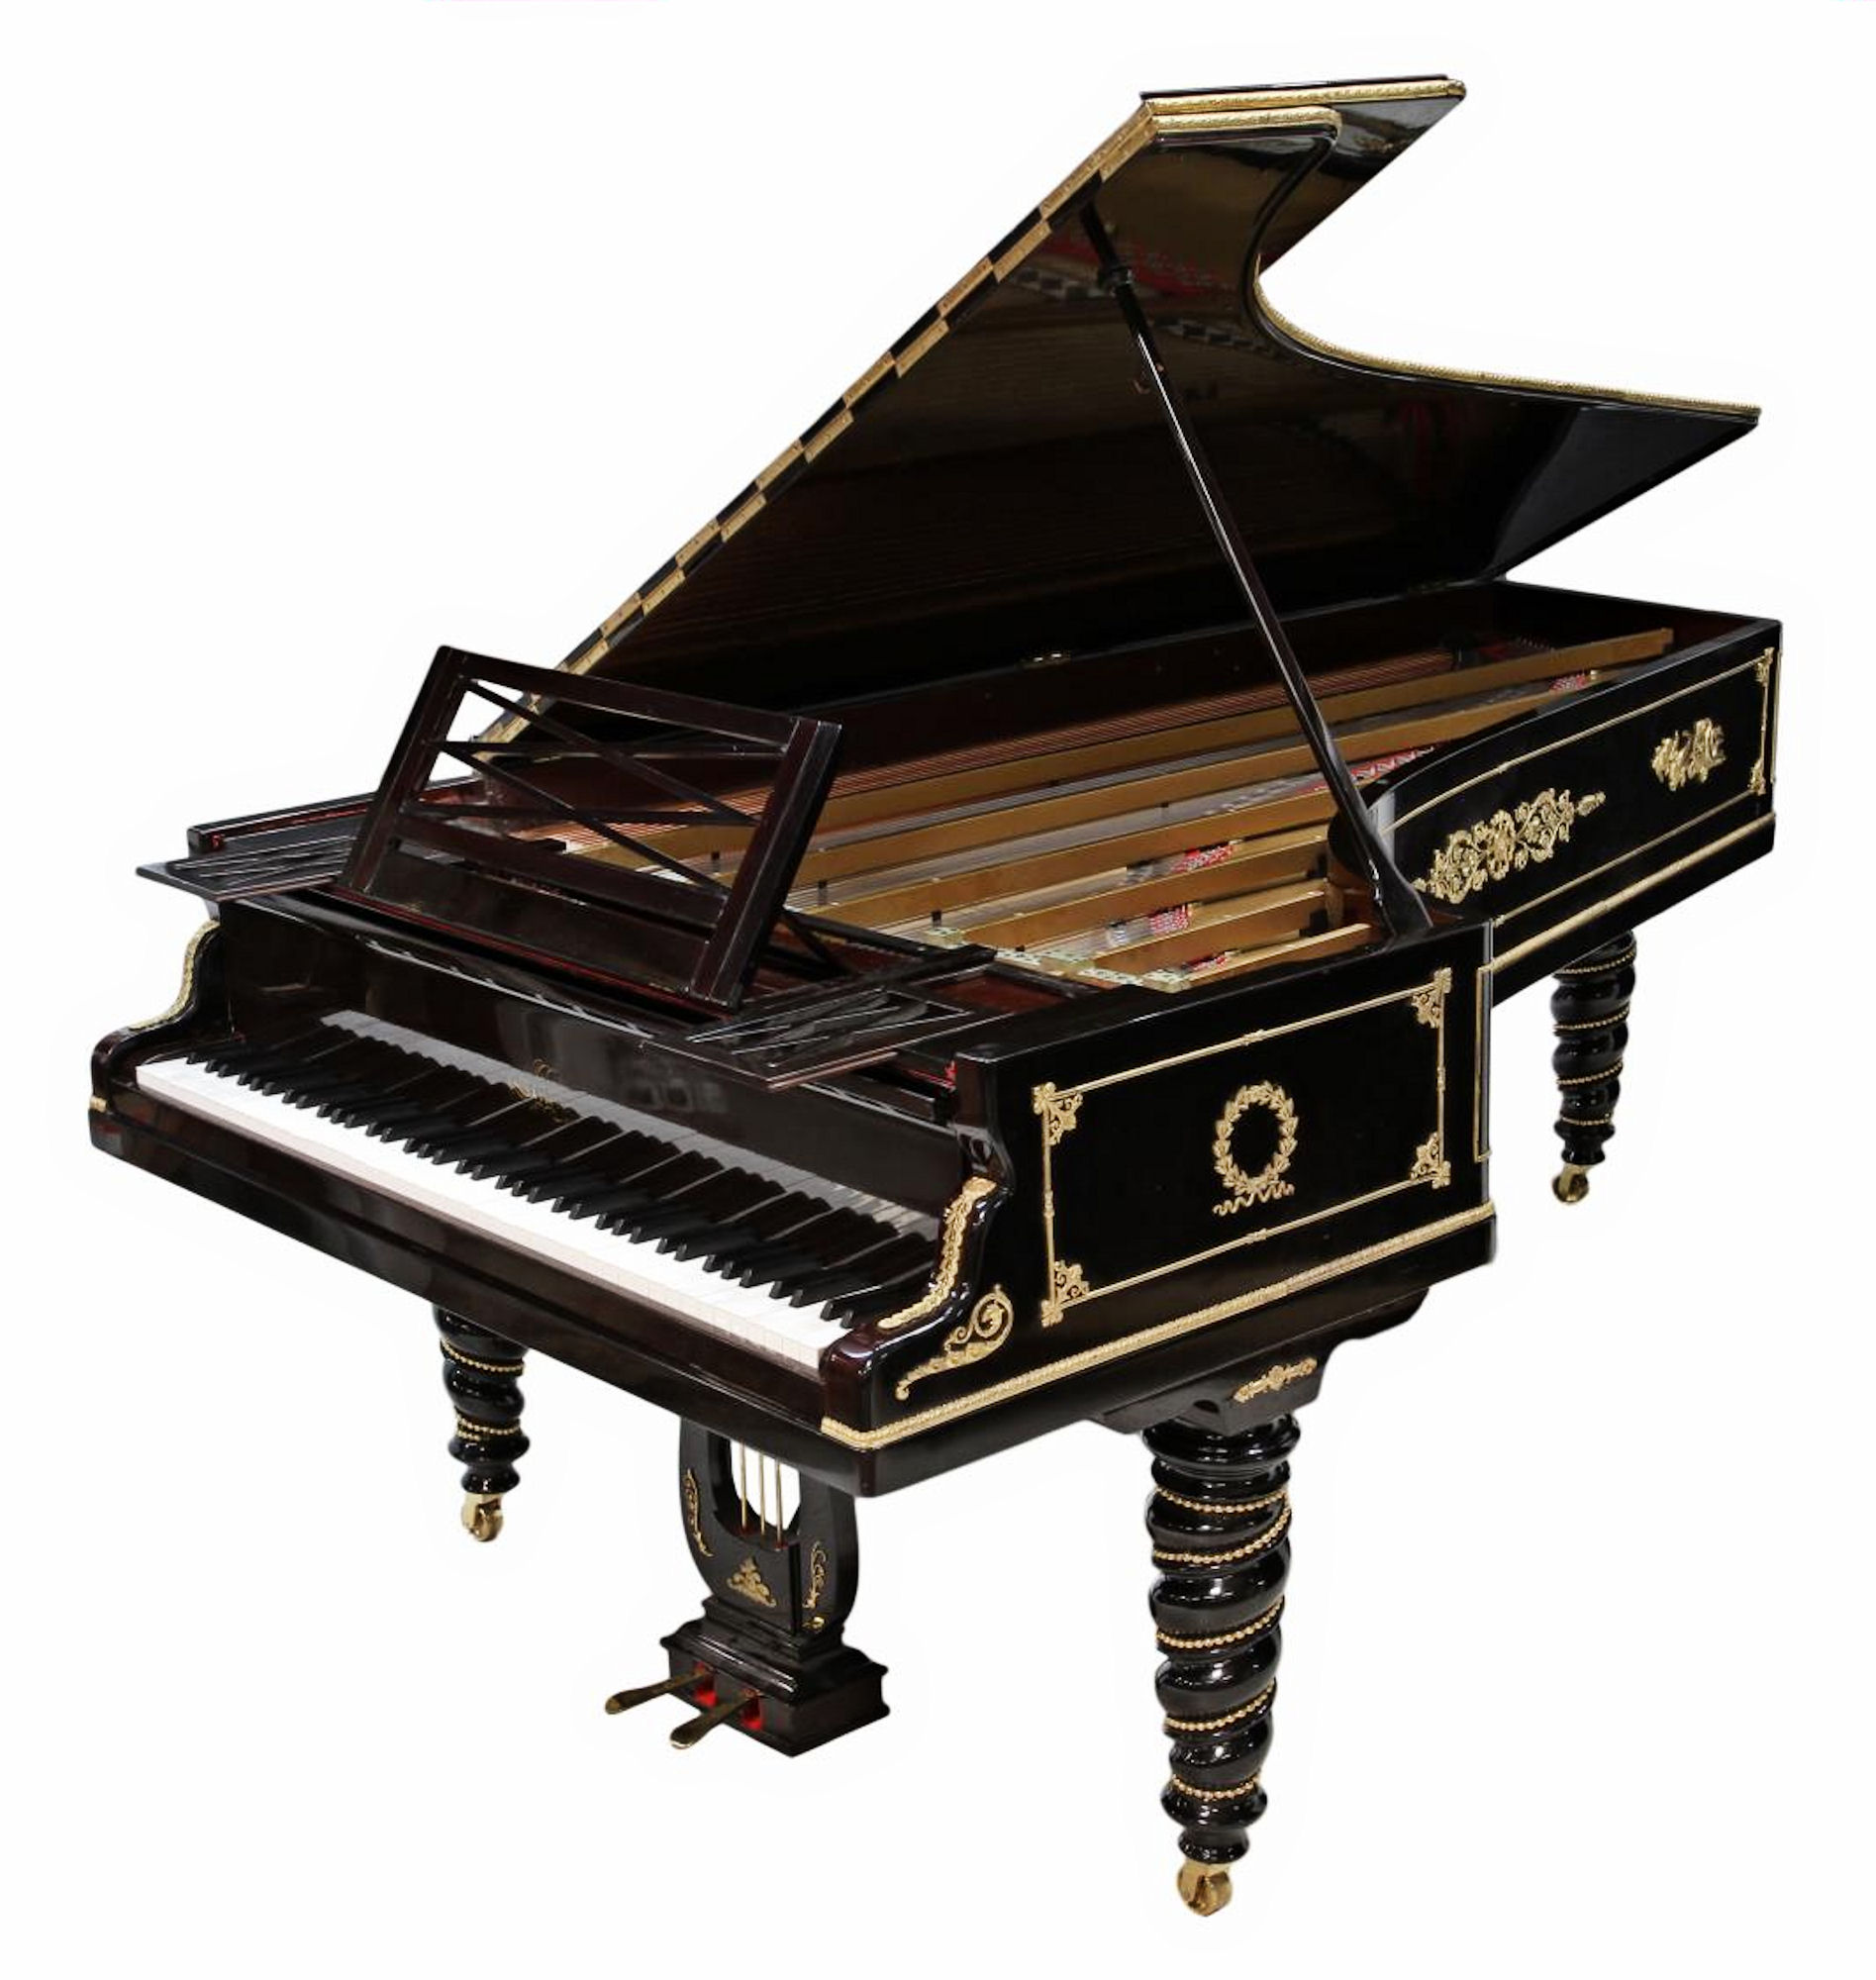 French Louis XVI style ormolu-mounted Grand Piano, Erard, Paris, c. 1903